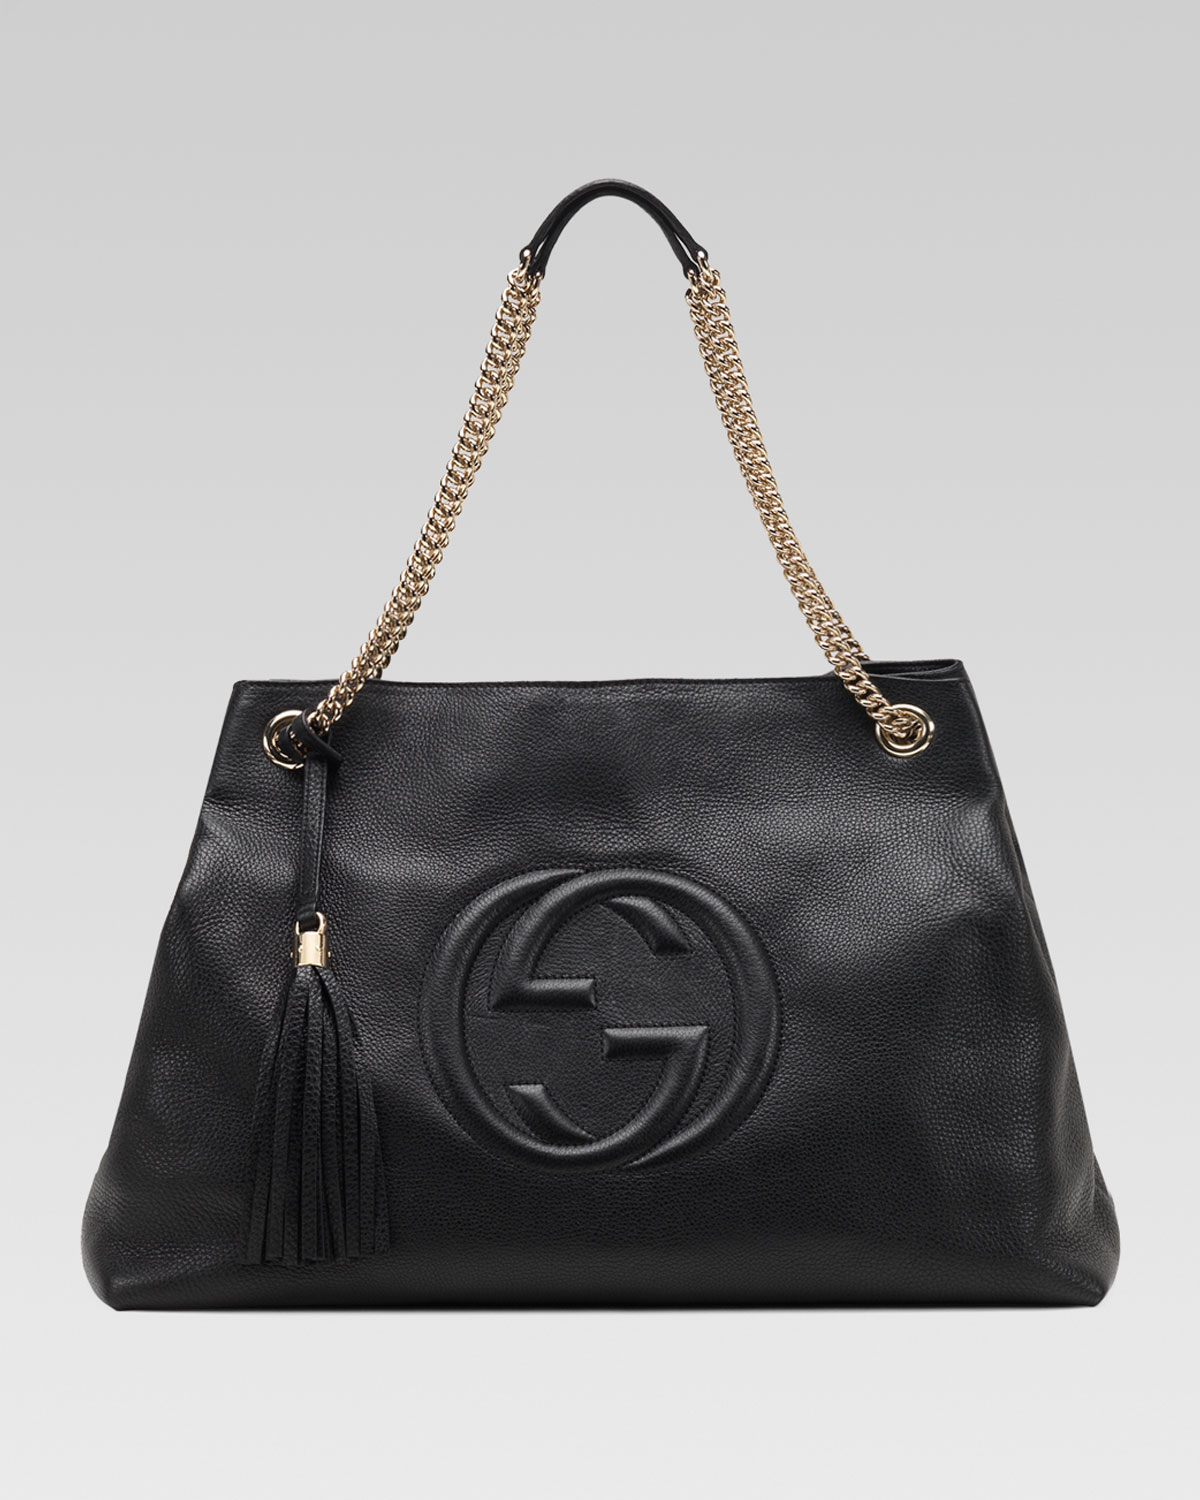 Gucci Soho Large Leather Doublechainstrap Shoulder Bag Black - Lyst